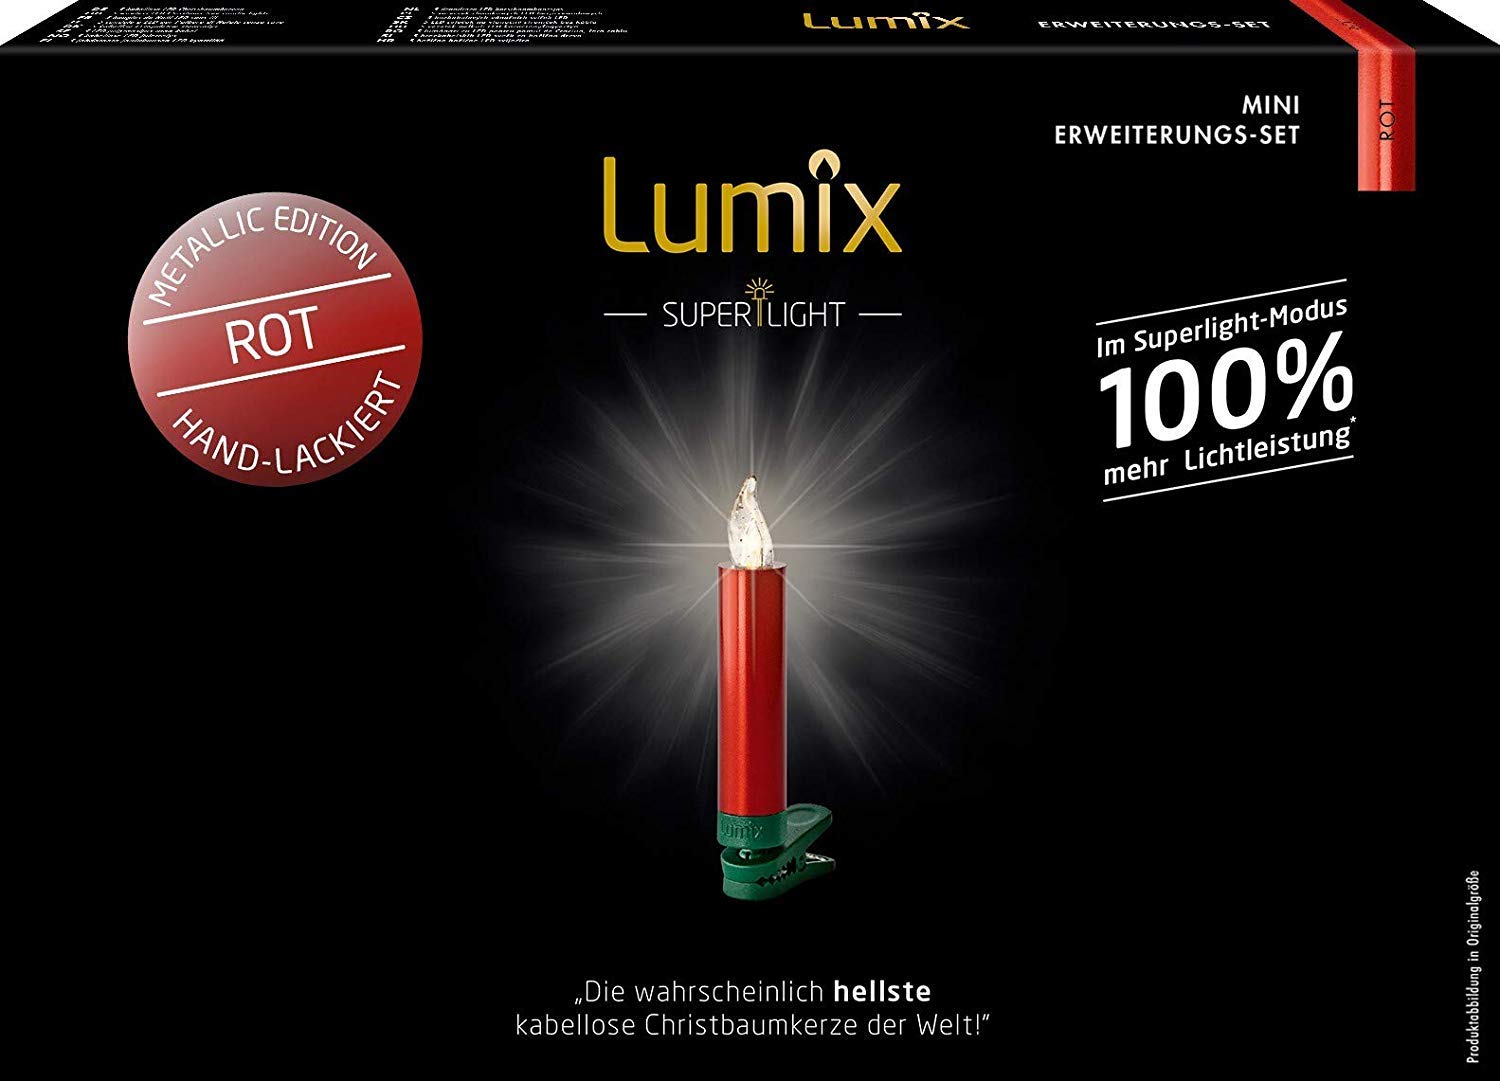 Lumix Kabellose LED Christbaumkerzen Superlight Mini Metallic Rot Erweiterungs-Set mit 6 Kerzen, Art. 75556